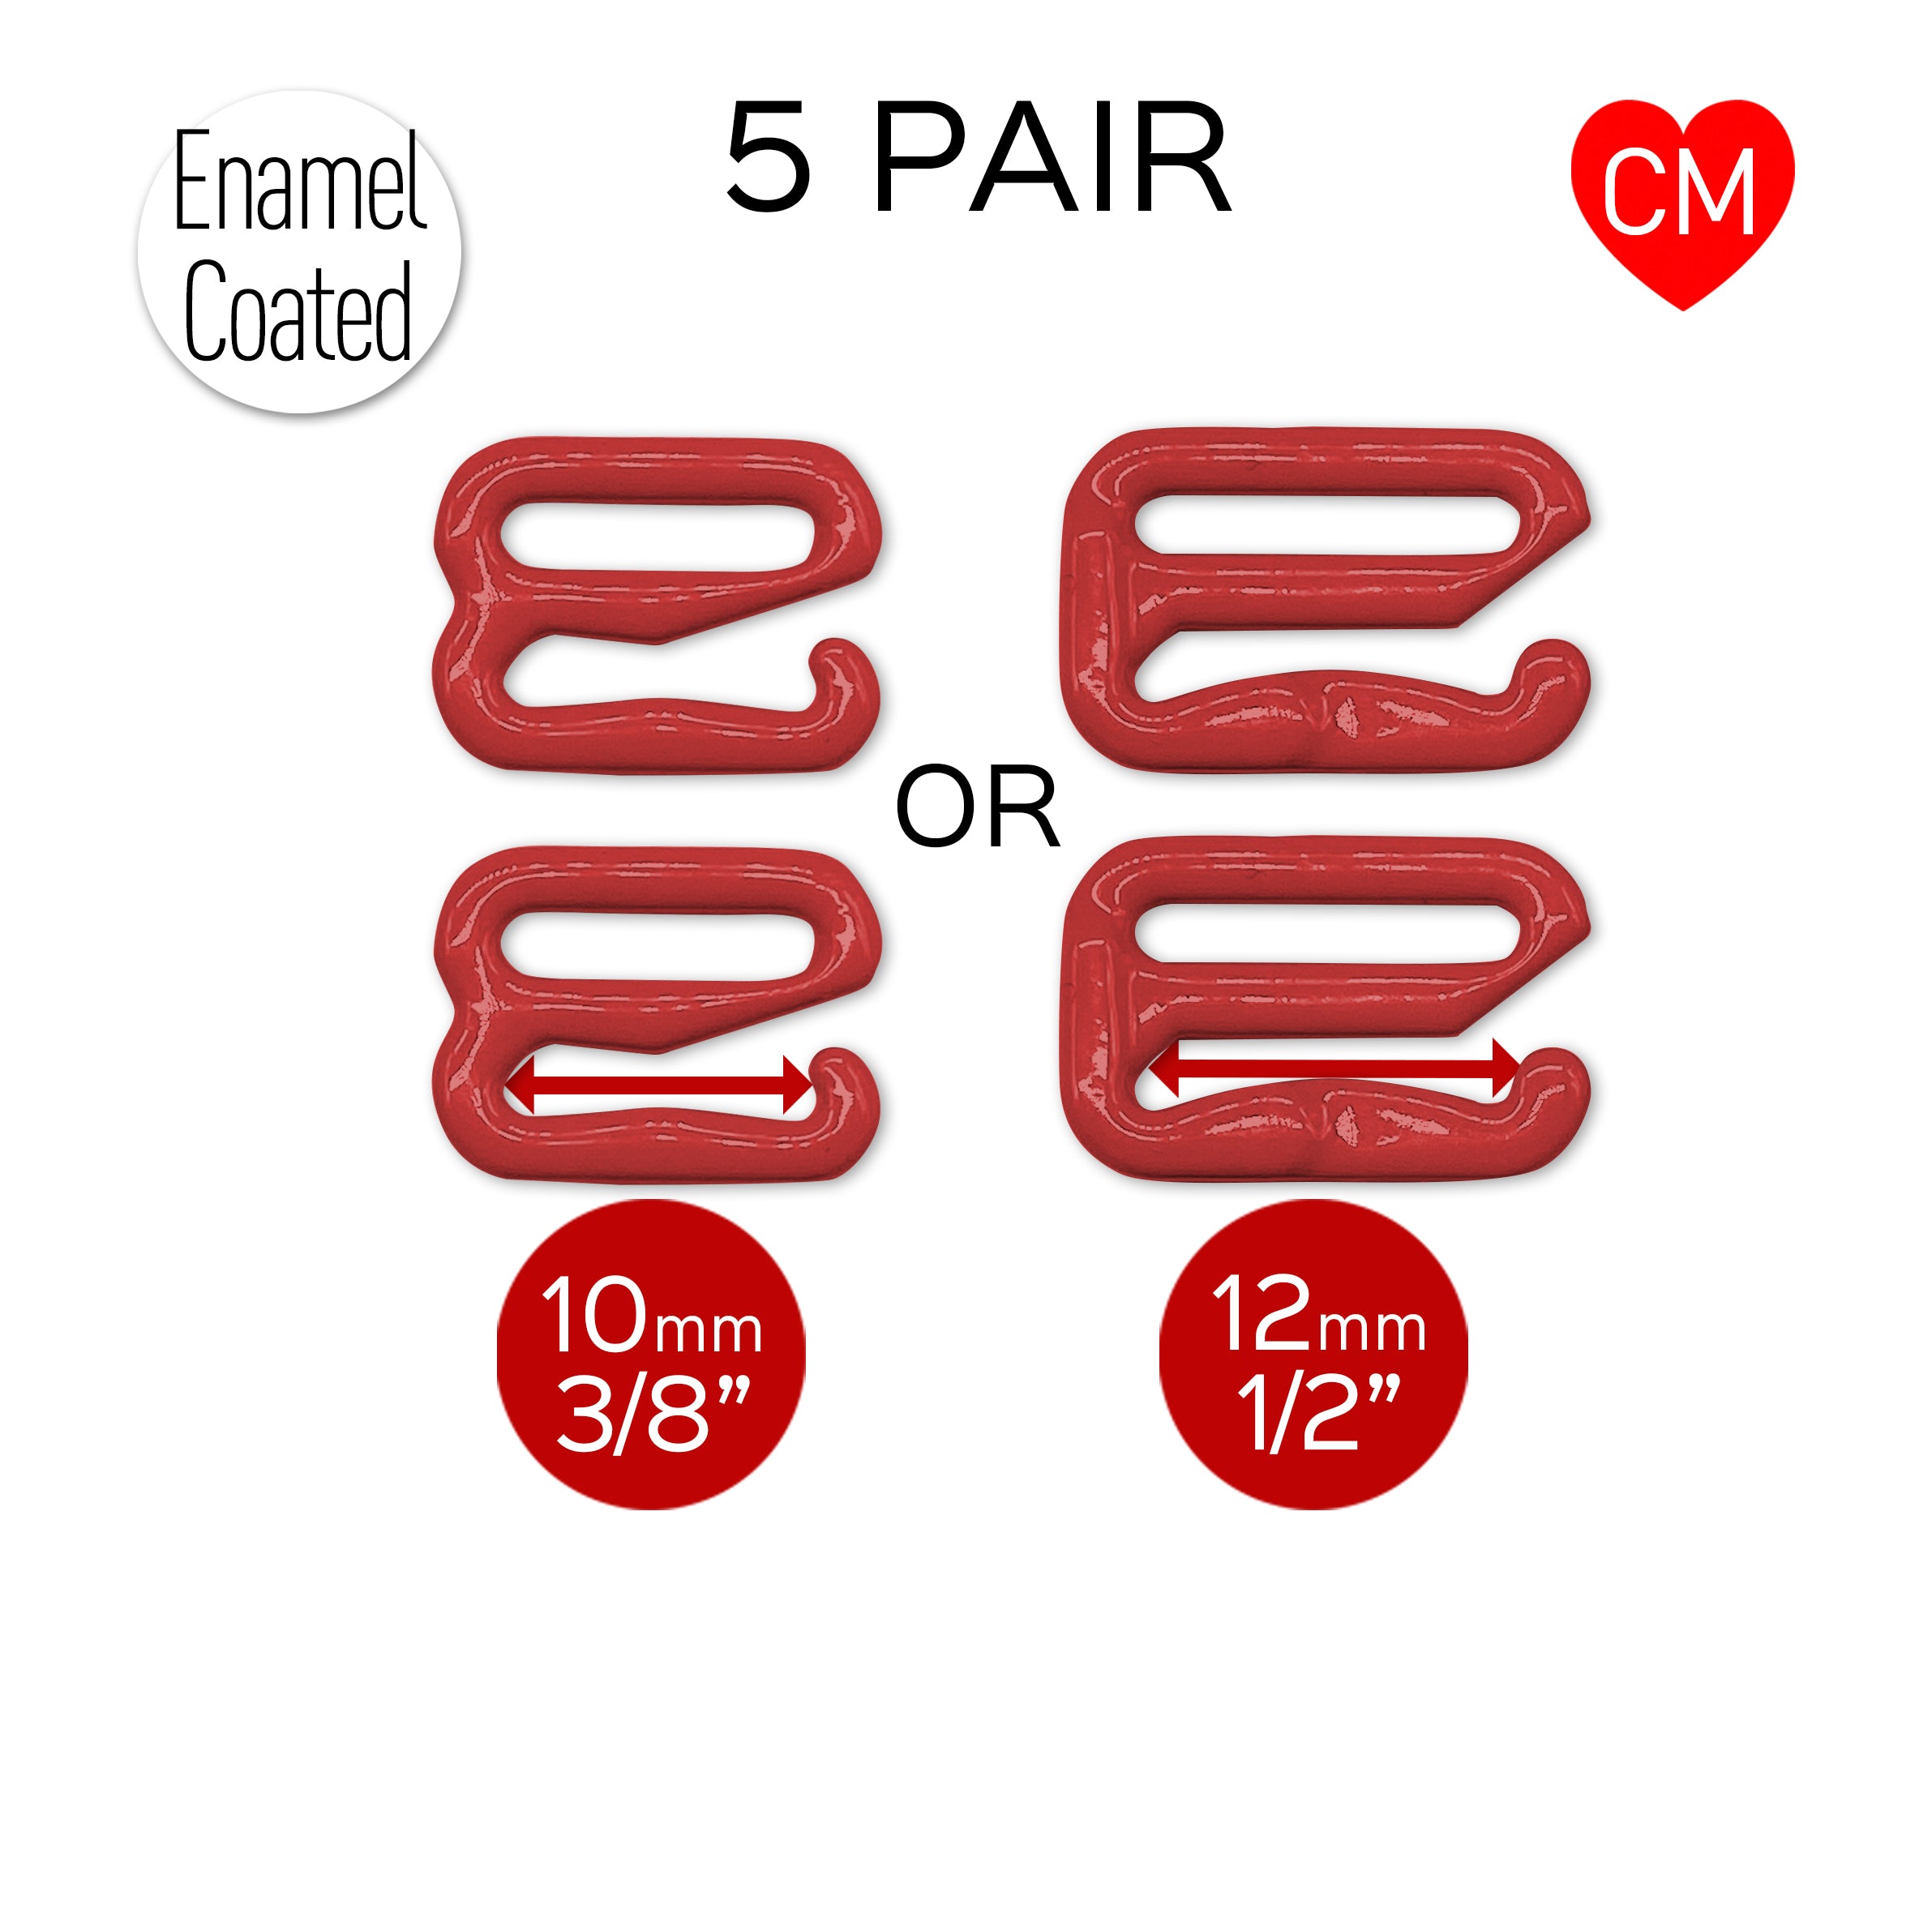 CLEARANCE- 5 Pair of Bra Strap Slider G Hooks in Enamel Coated Regal Red for Swimwear or Bra making- 3/8" or 1/2" - Stitch Love Studio